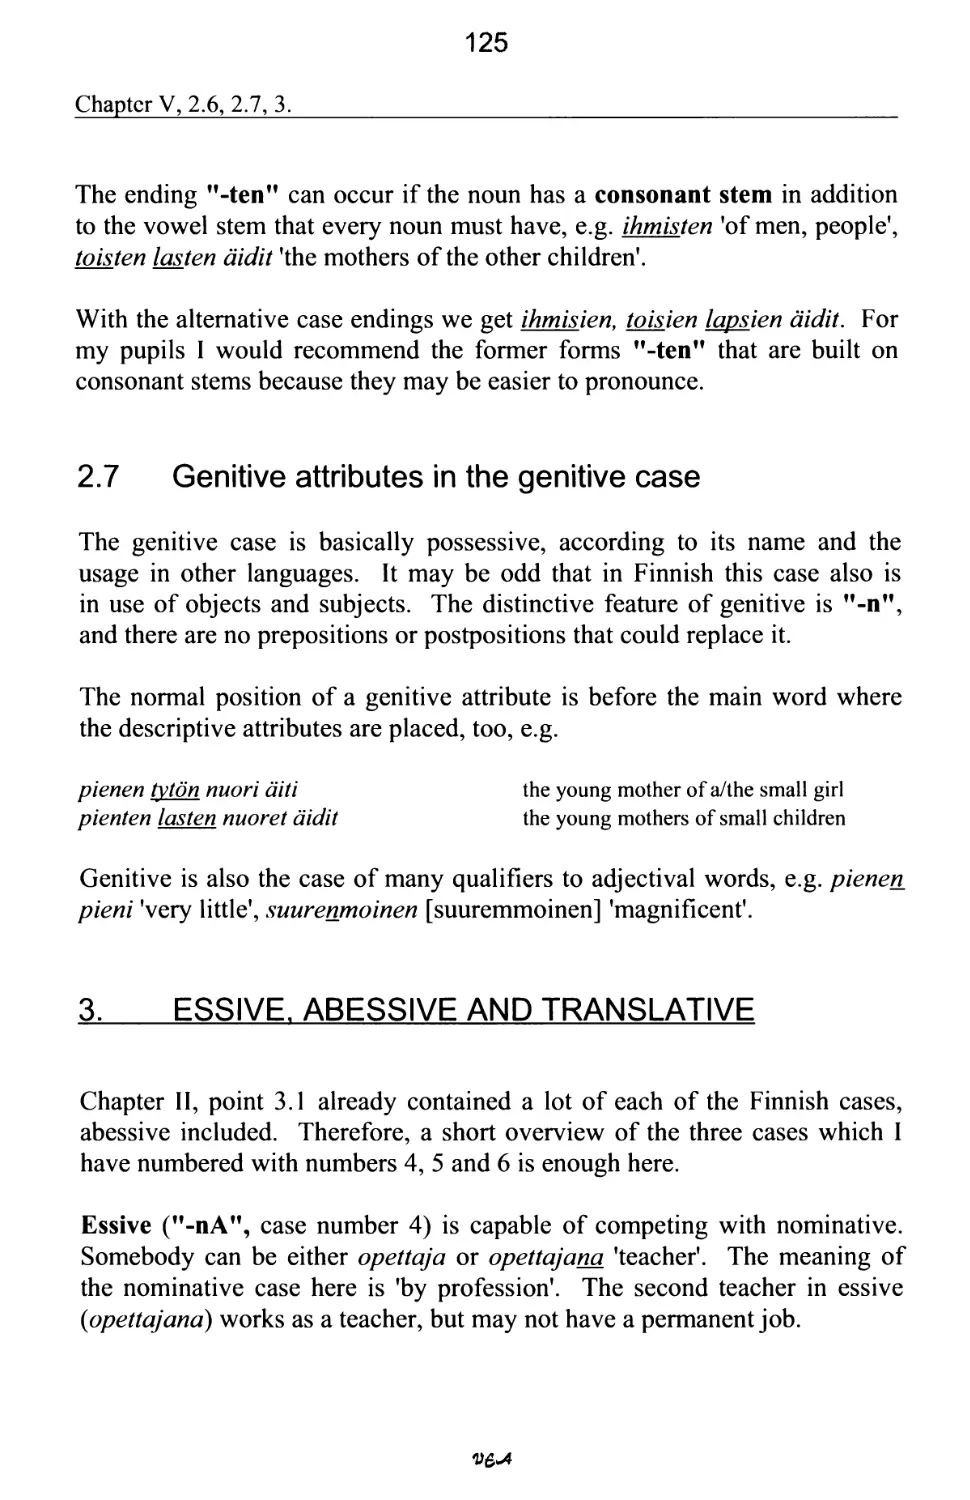 2.7 Genitive attributes in the genitive case
3. ESSIVE, ABESSIVE AND TRANSLATIVE